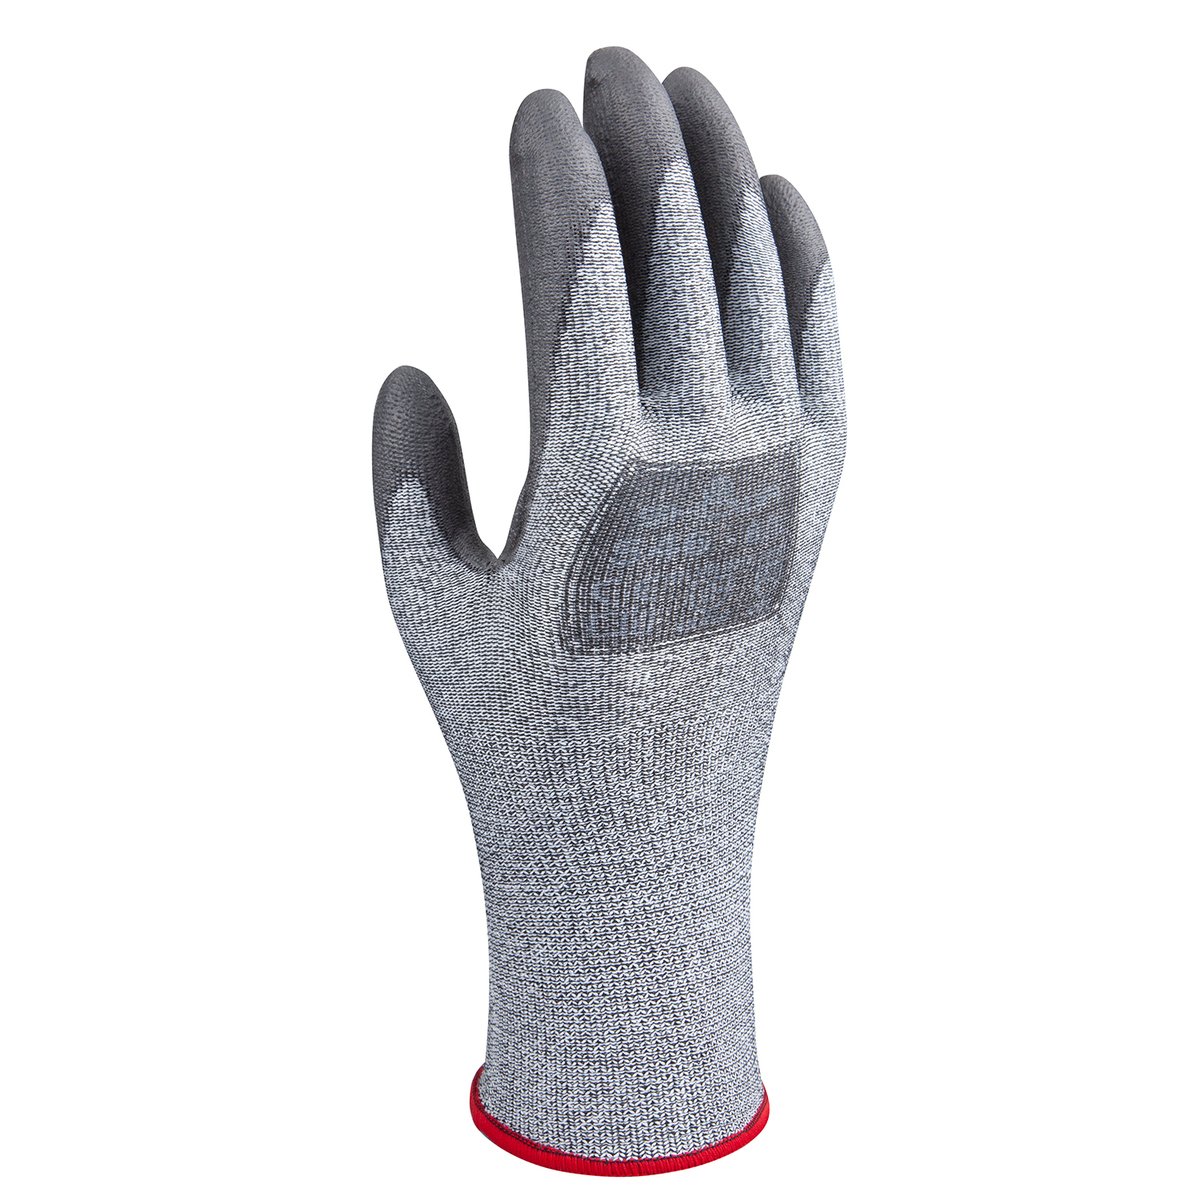 SHOWA® 546 13 Gauge High Performance Polyethylene Cut Resistant Gloves With Polyurethane Coating